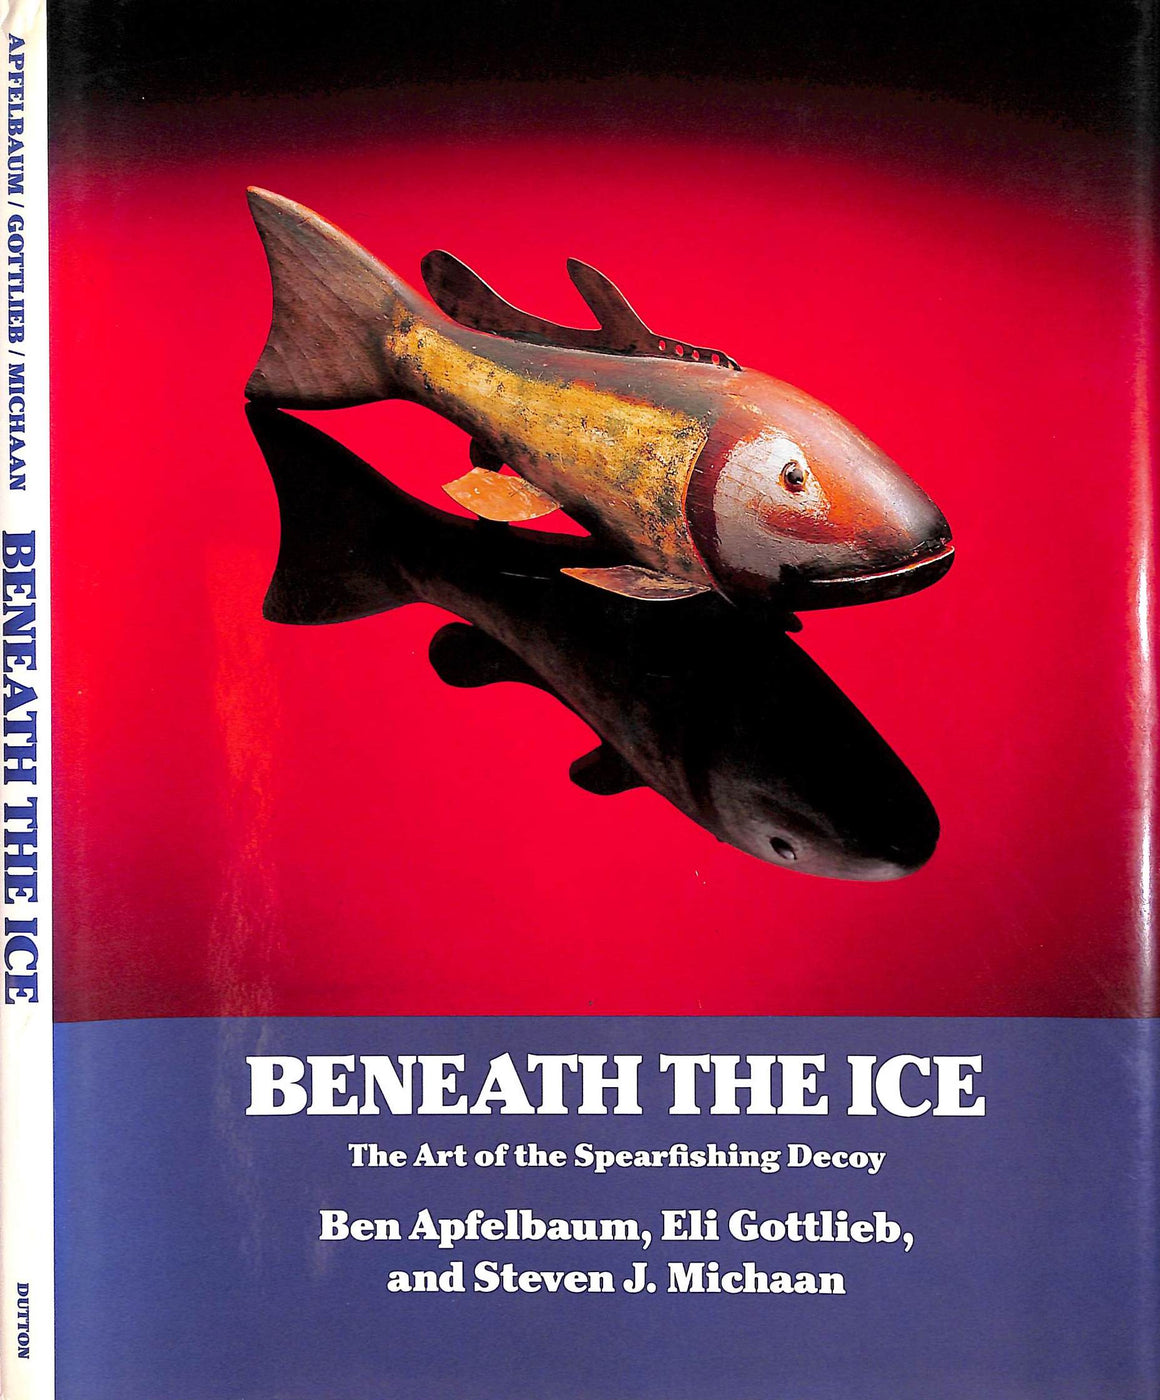 "Beneath The Ice: The Art Of The Spearfishing Decoy" 1990 APFELBAUM, Ben, GOTTLIEB, Eli, and MICHAAN, Steven J.